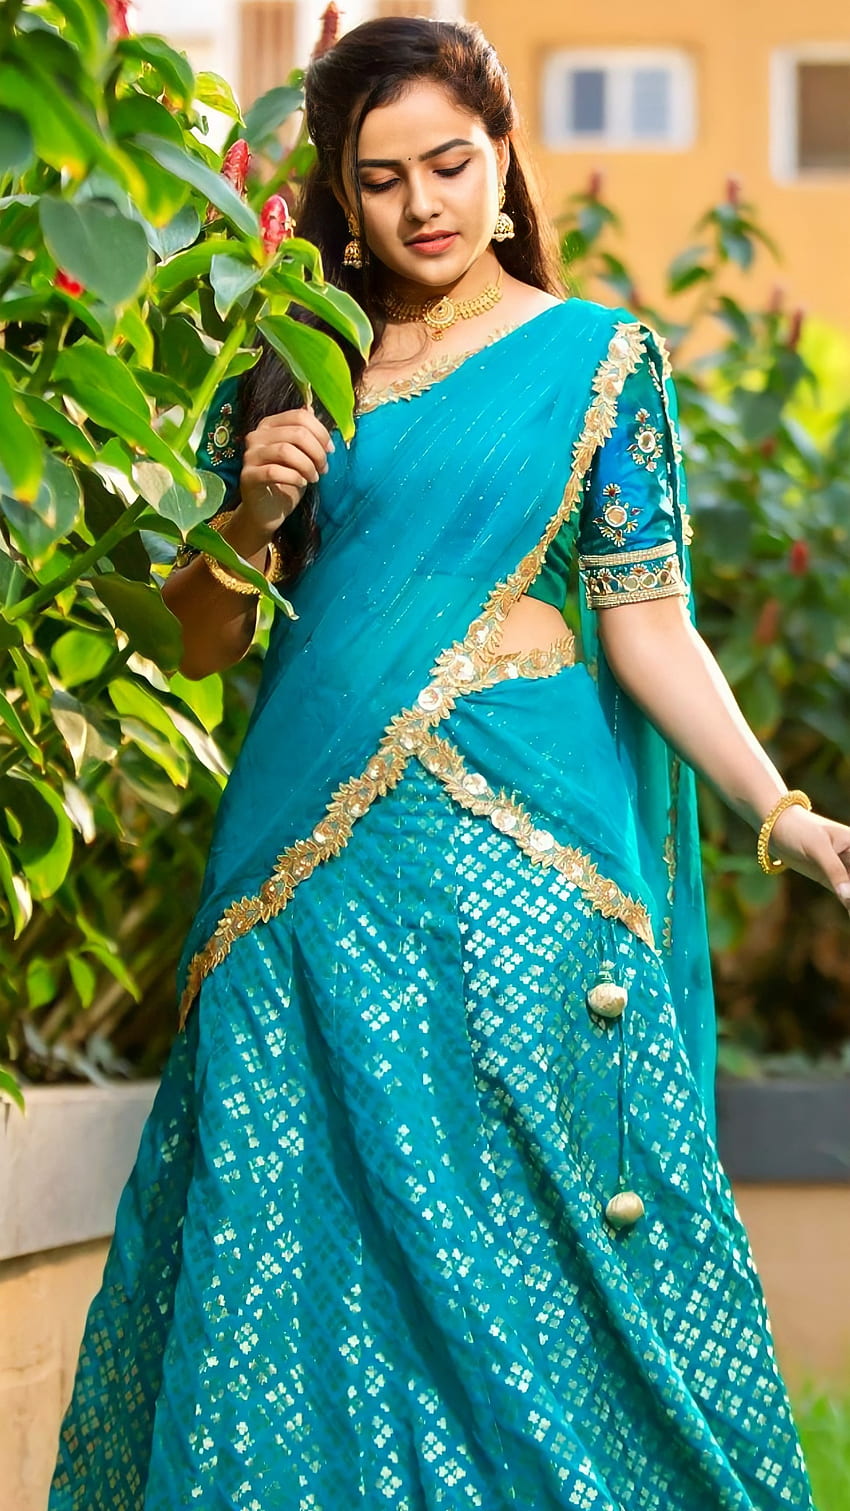 Vaishnavi chaithanya , actrice telugu, mannequin Fond d'écran de téléphone HD